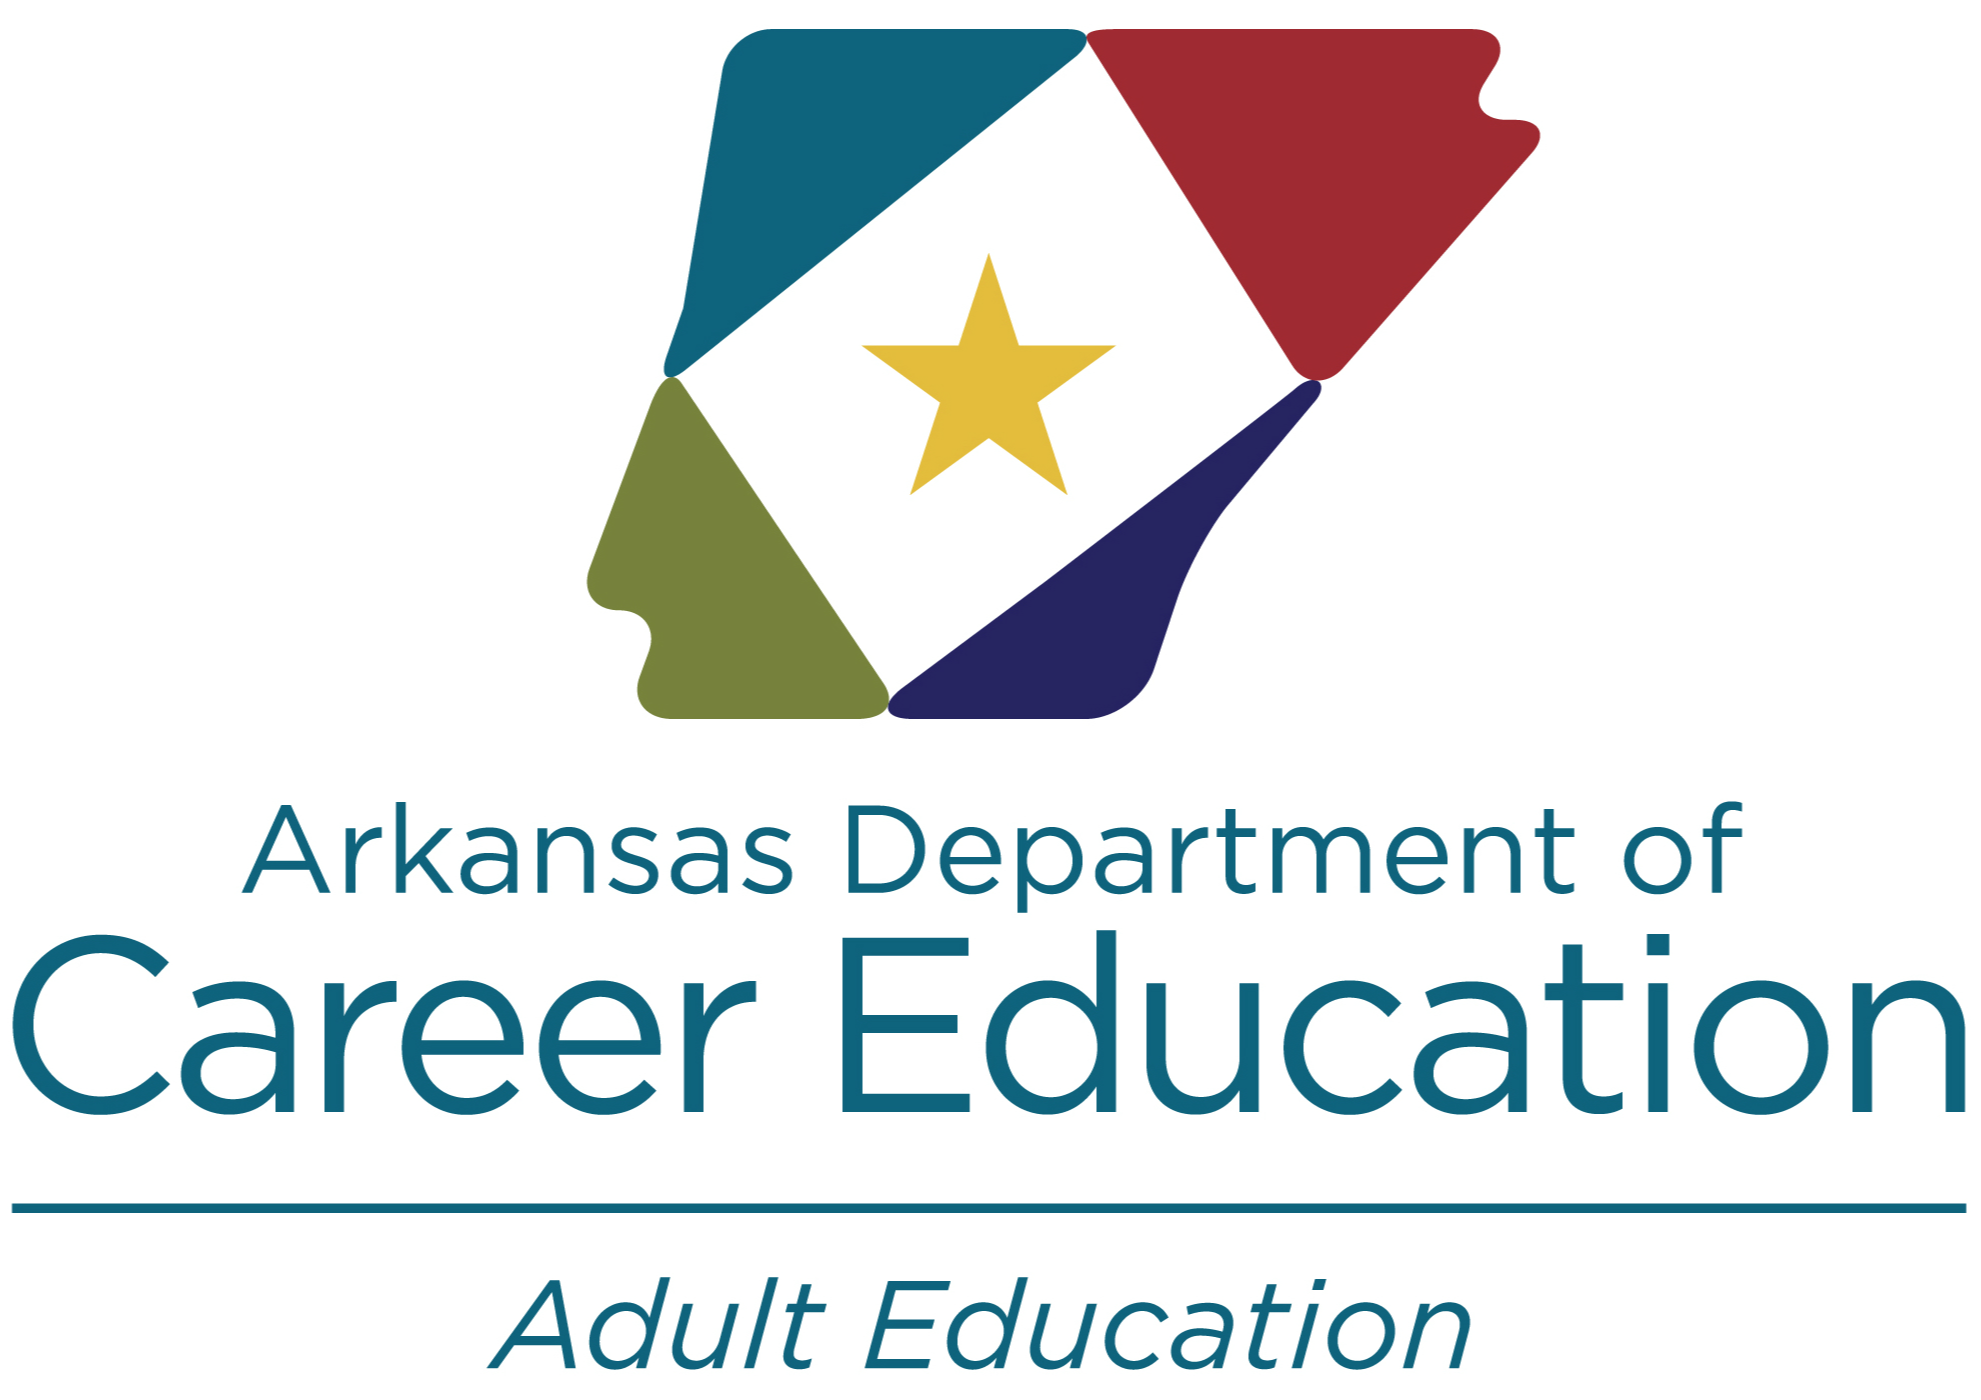 Arkansas Department of Career Education Adult Education